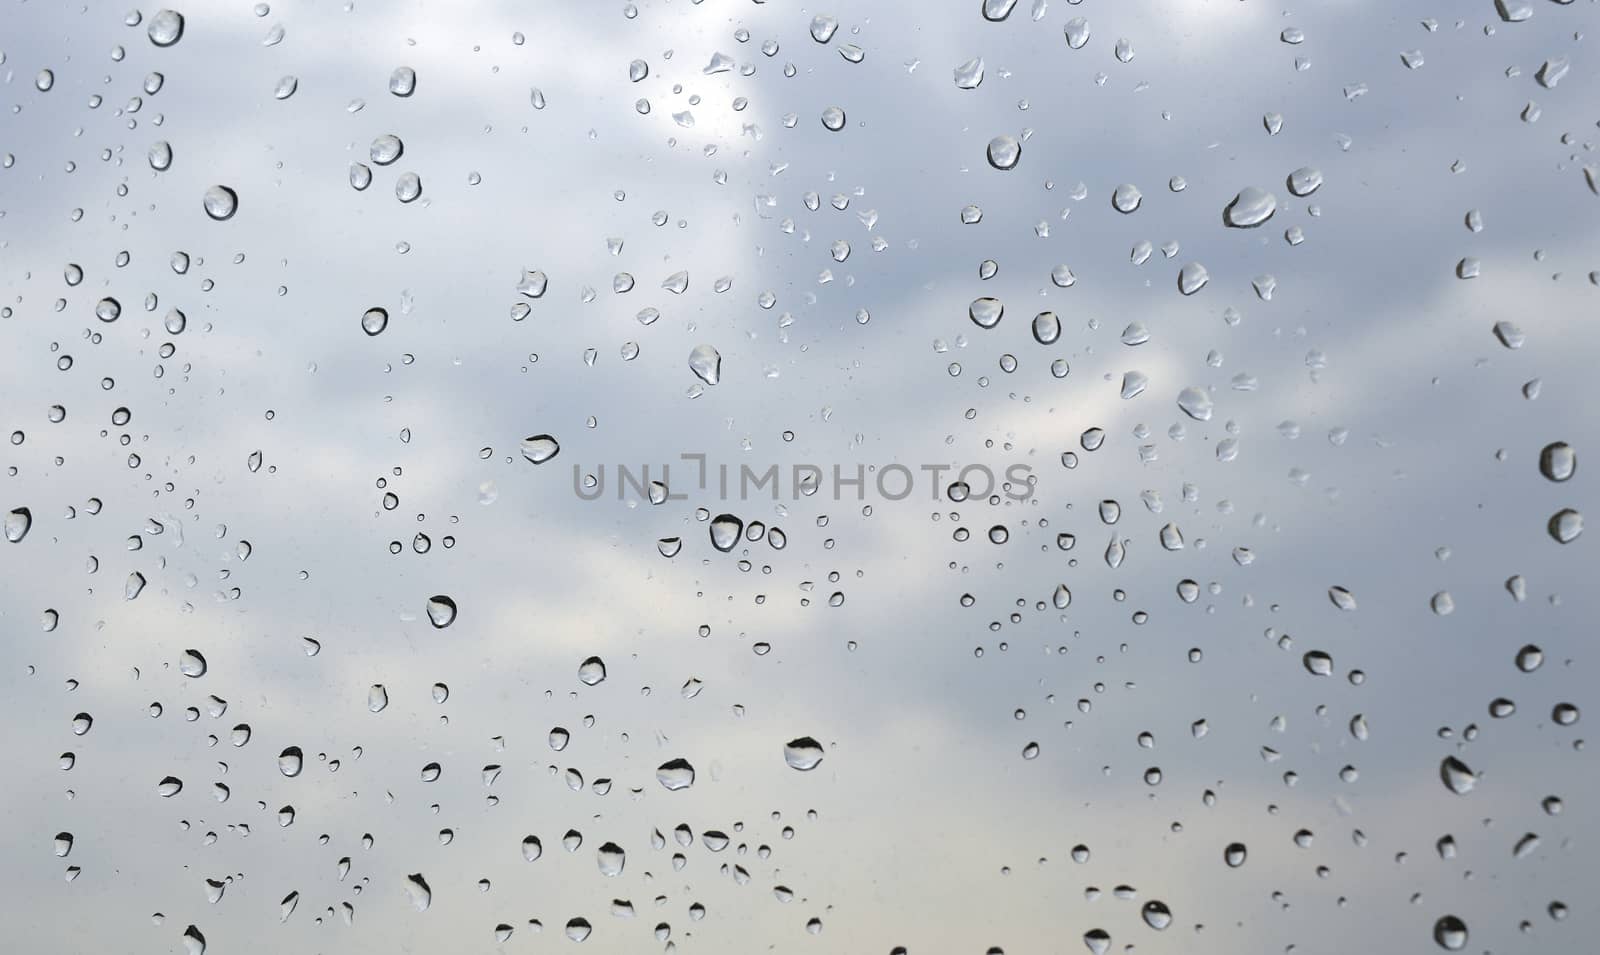 Drops of rain on the window, shallow dof